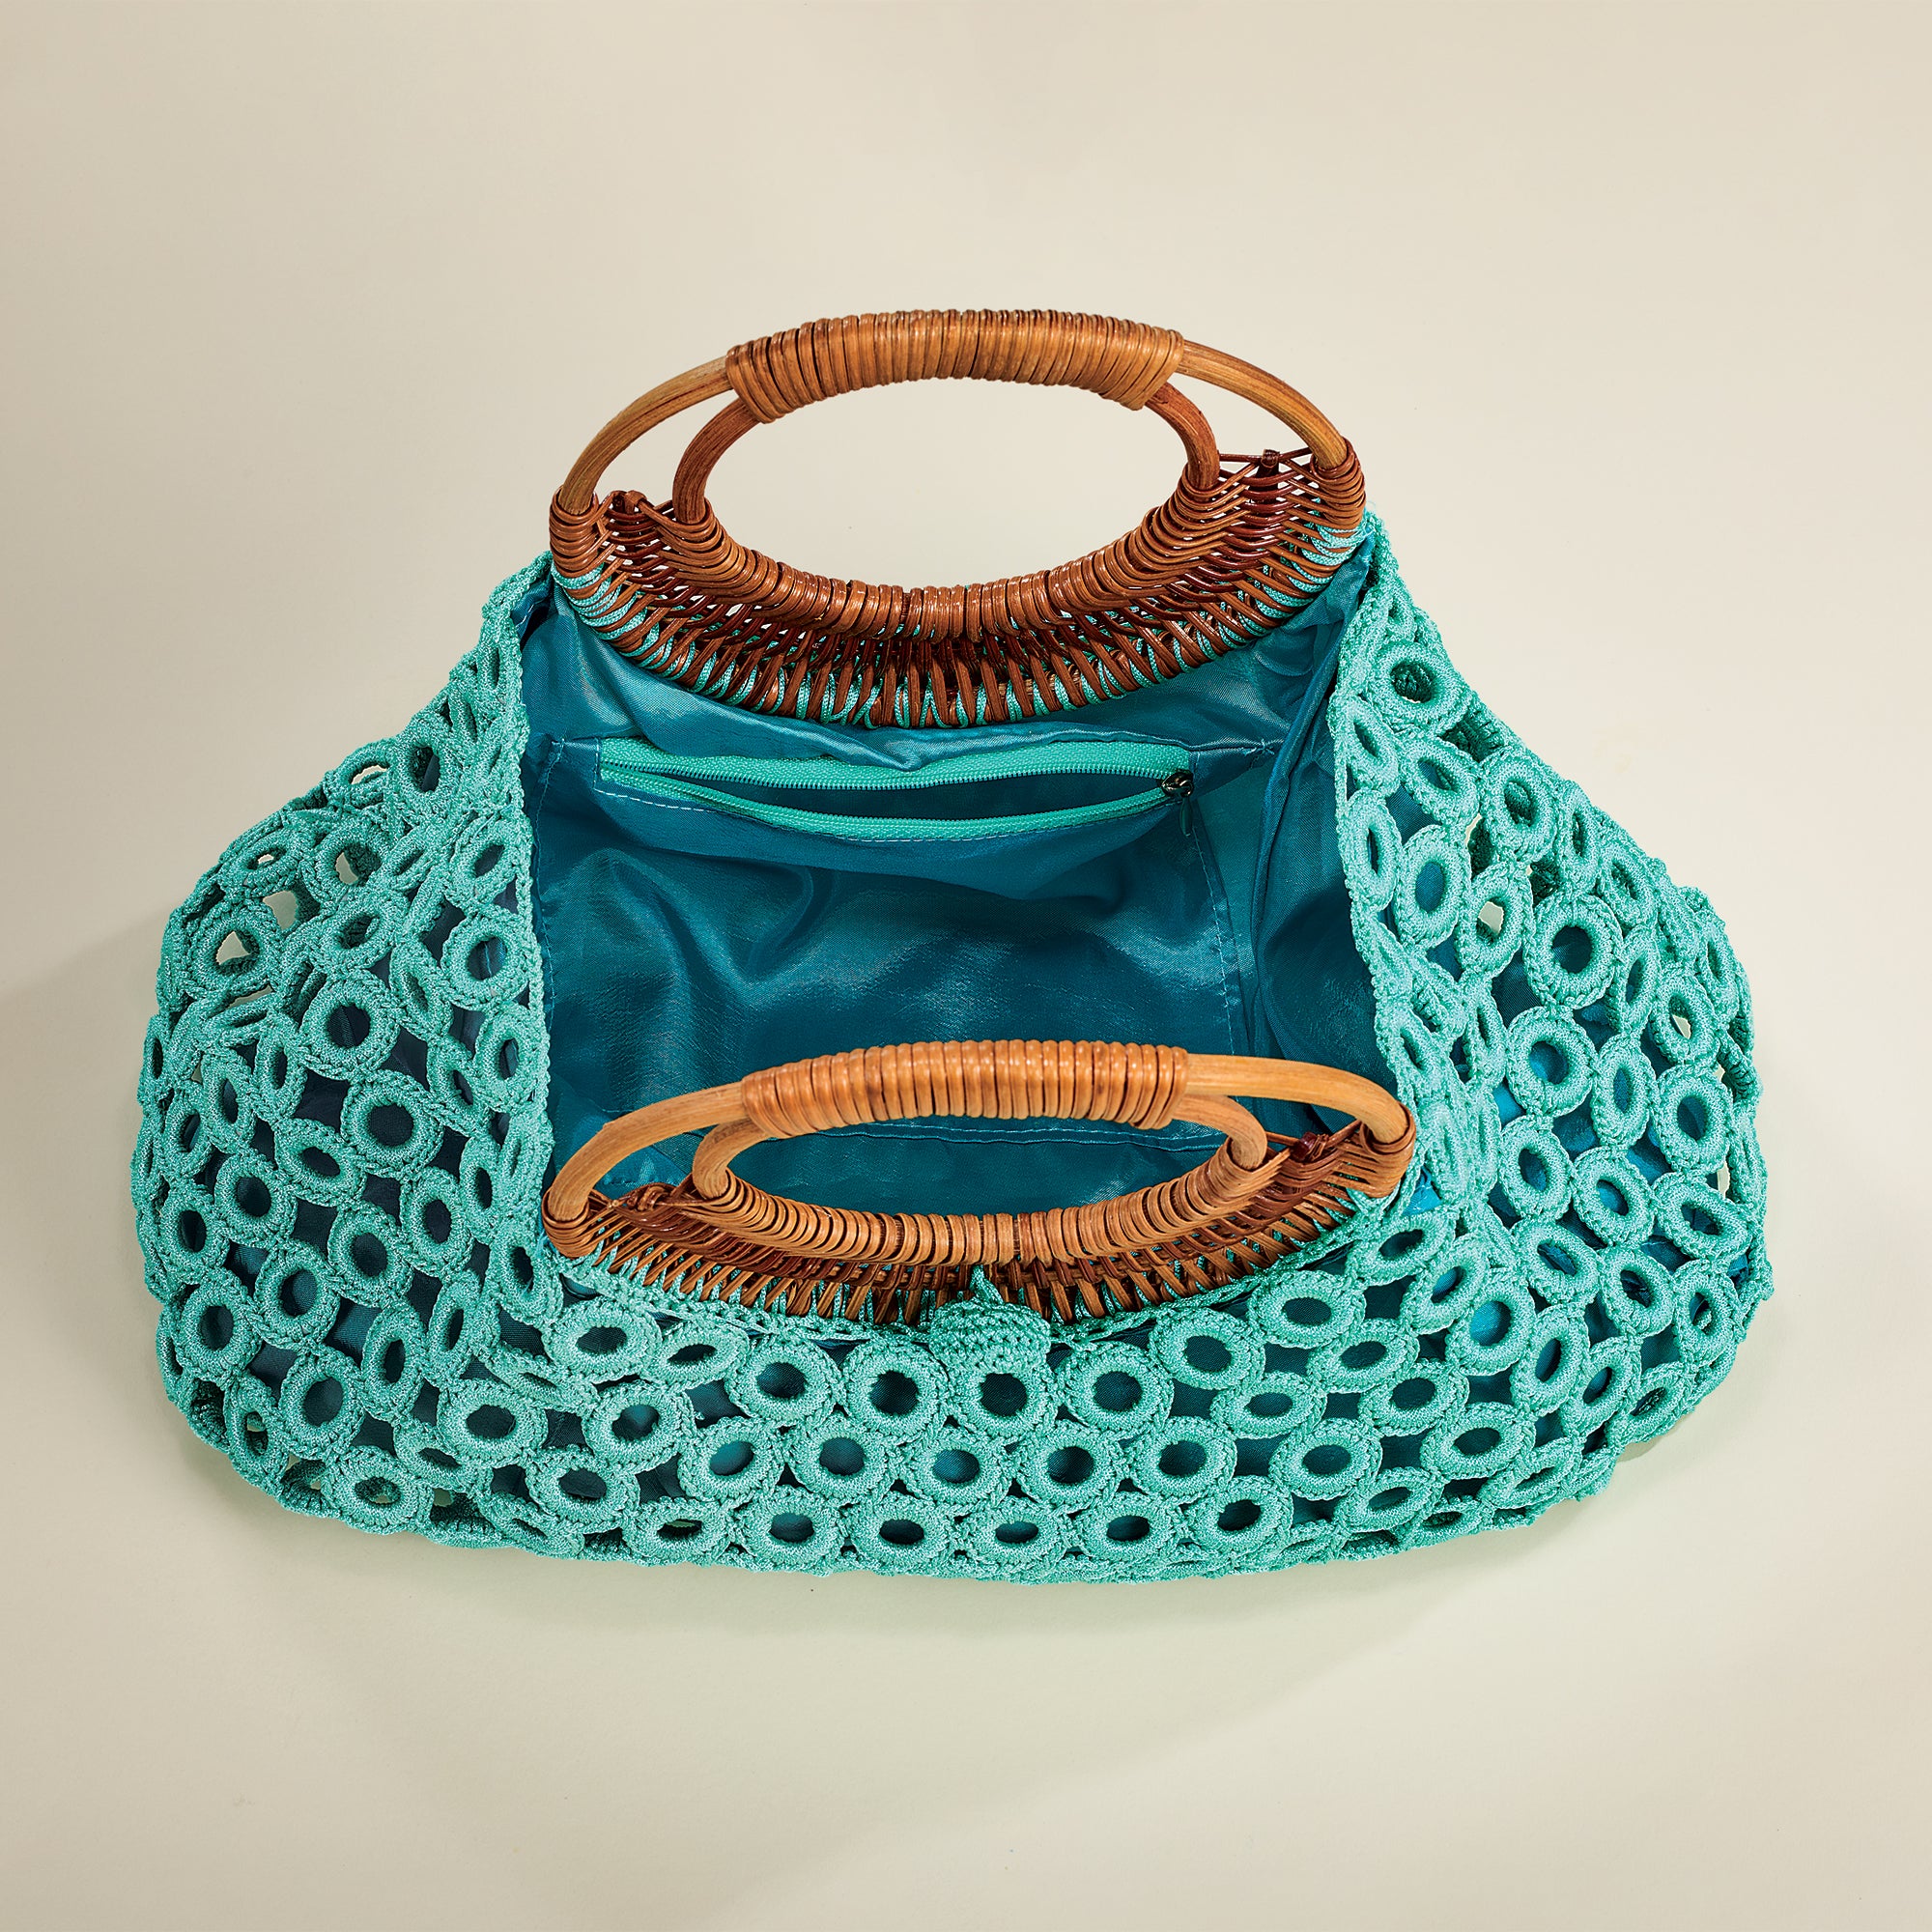 Aqua Crocheted Italian Handbag